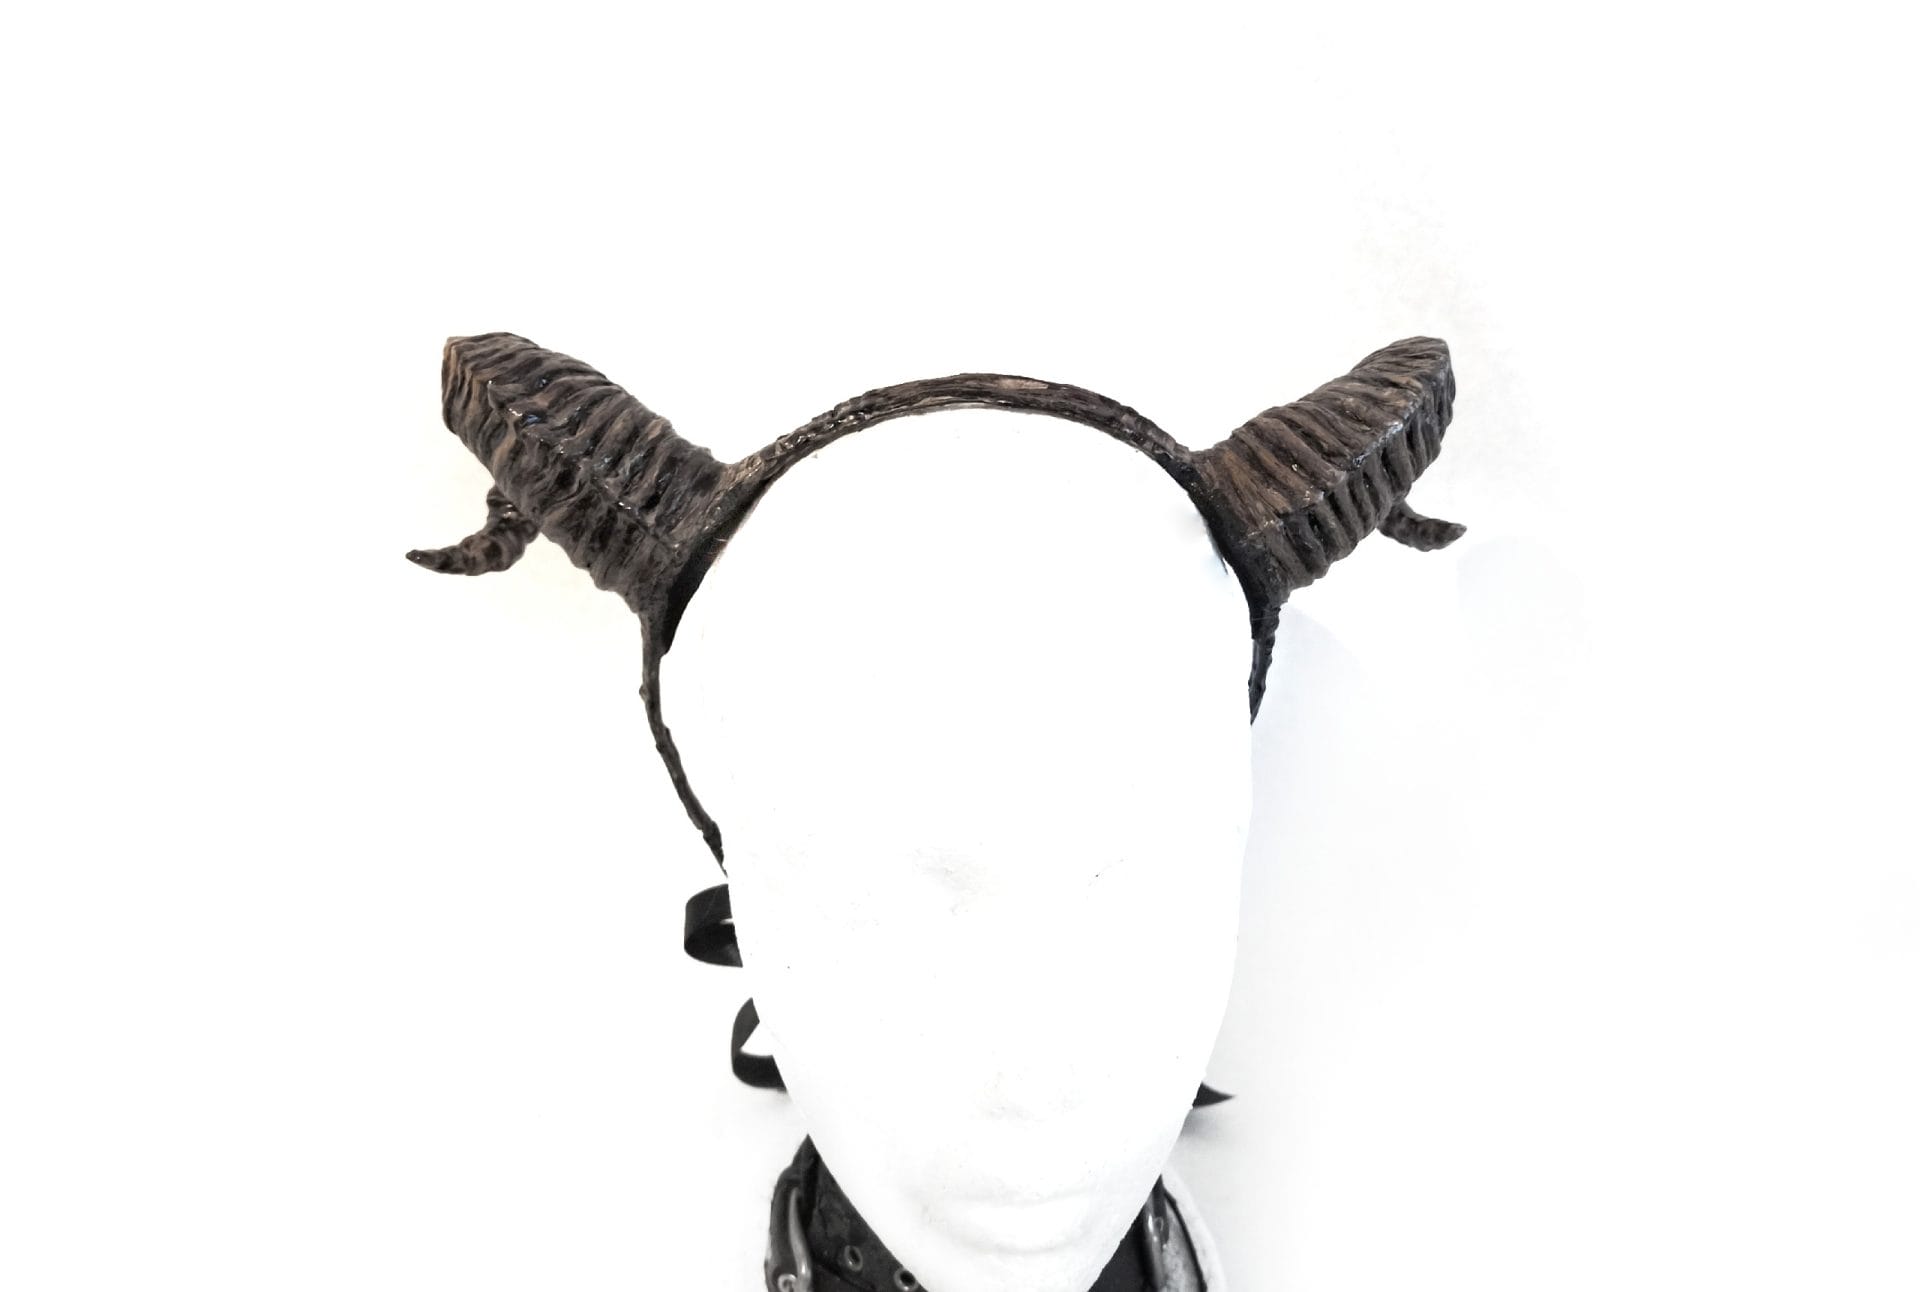 Small twisted ram horns on the headband